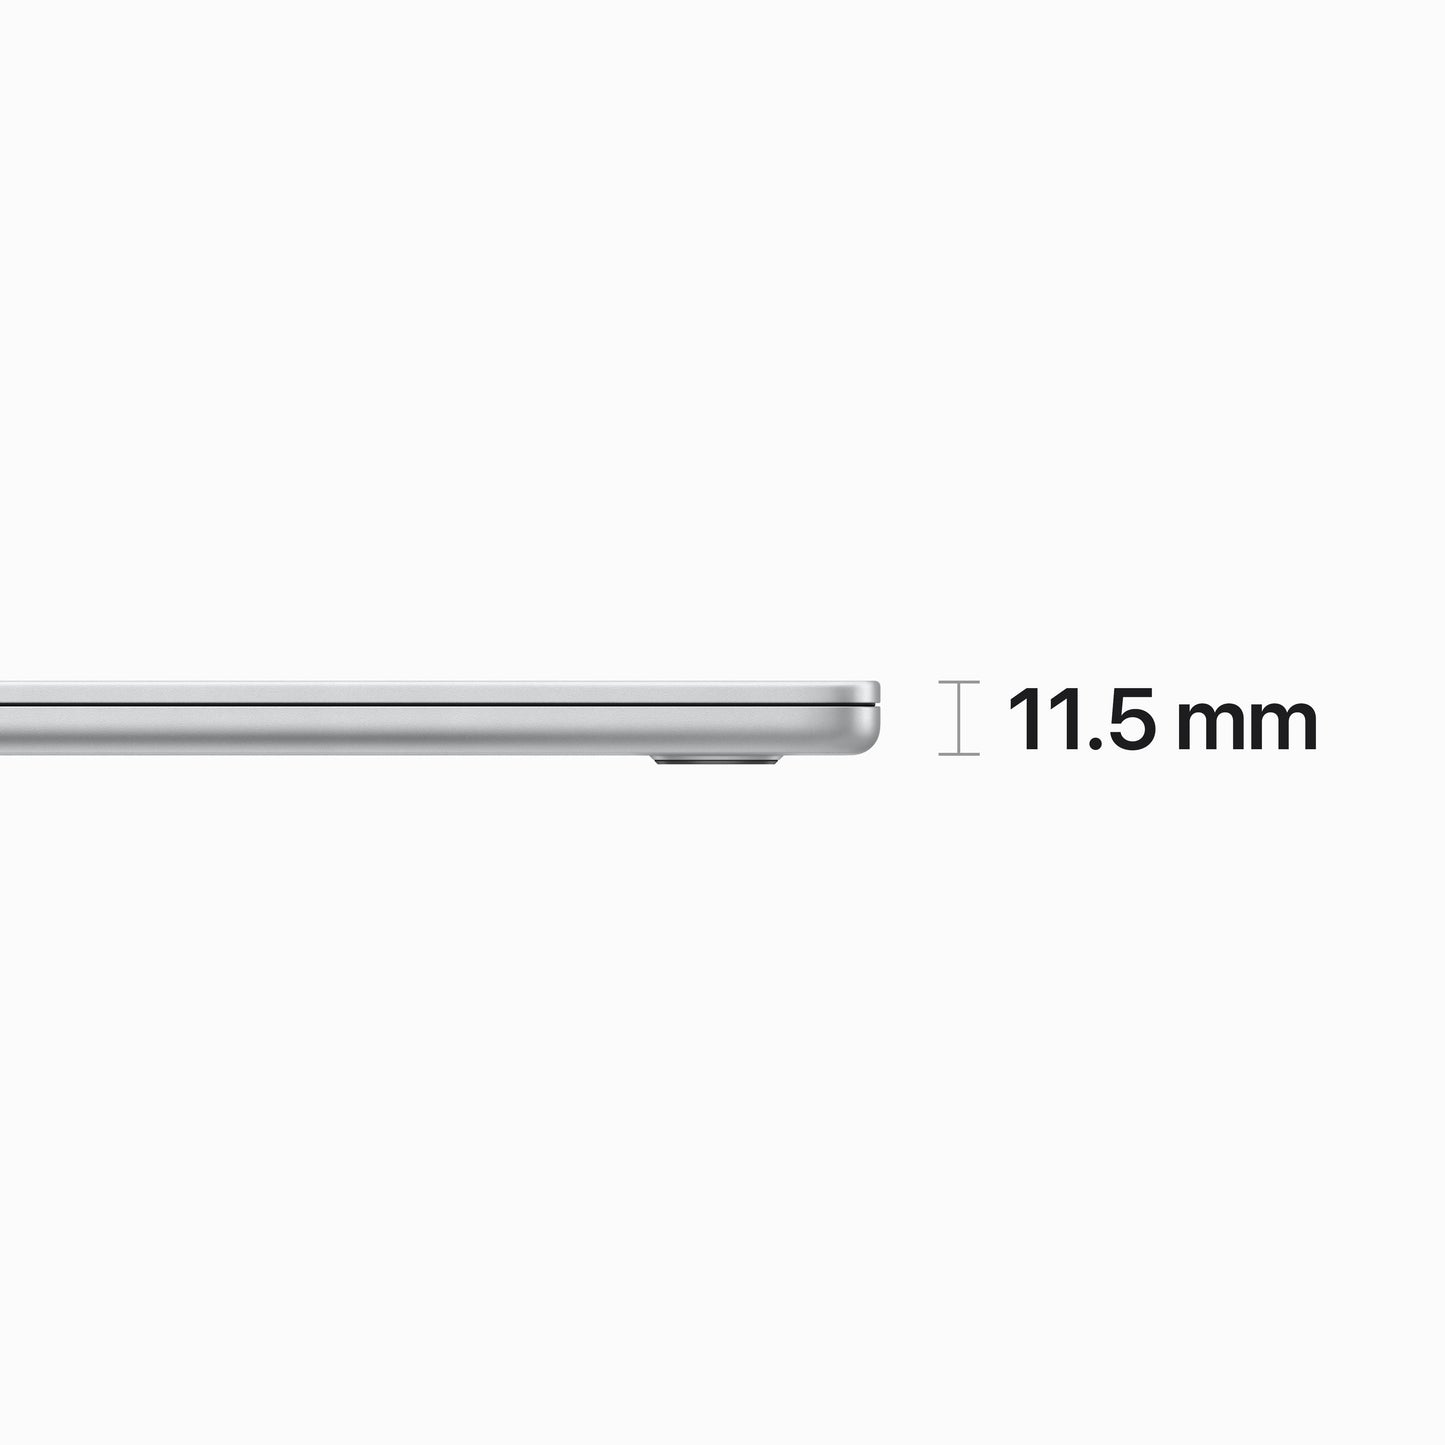 15-inch MacBook Air: Apple M2 chip with 8‑core CPU and 10‑core GPU, 512GB SSD - Silver